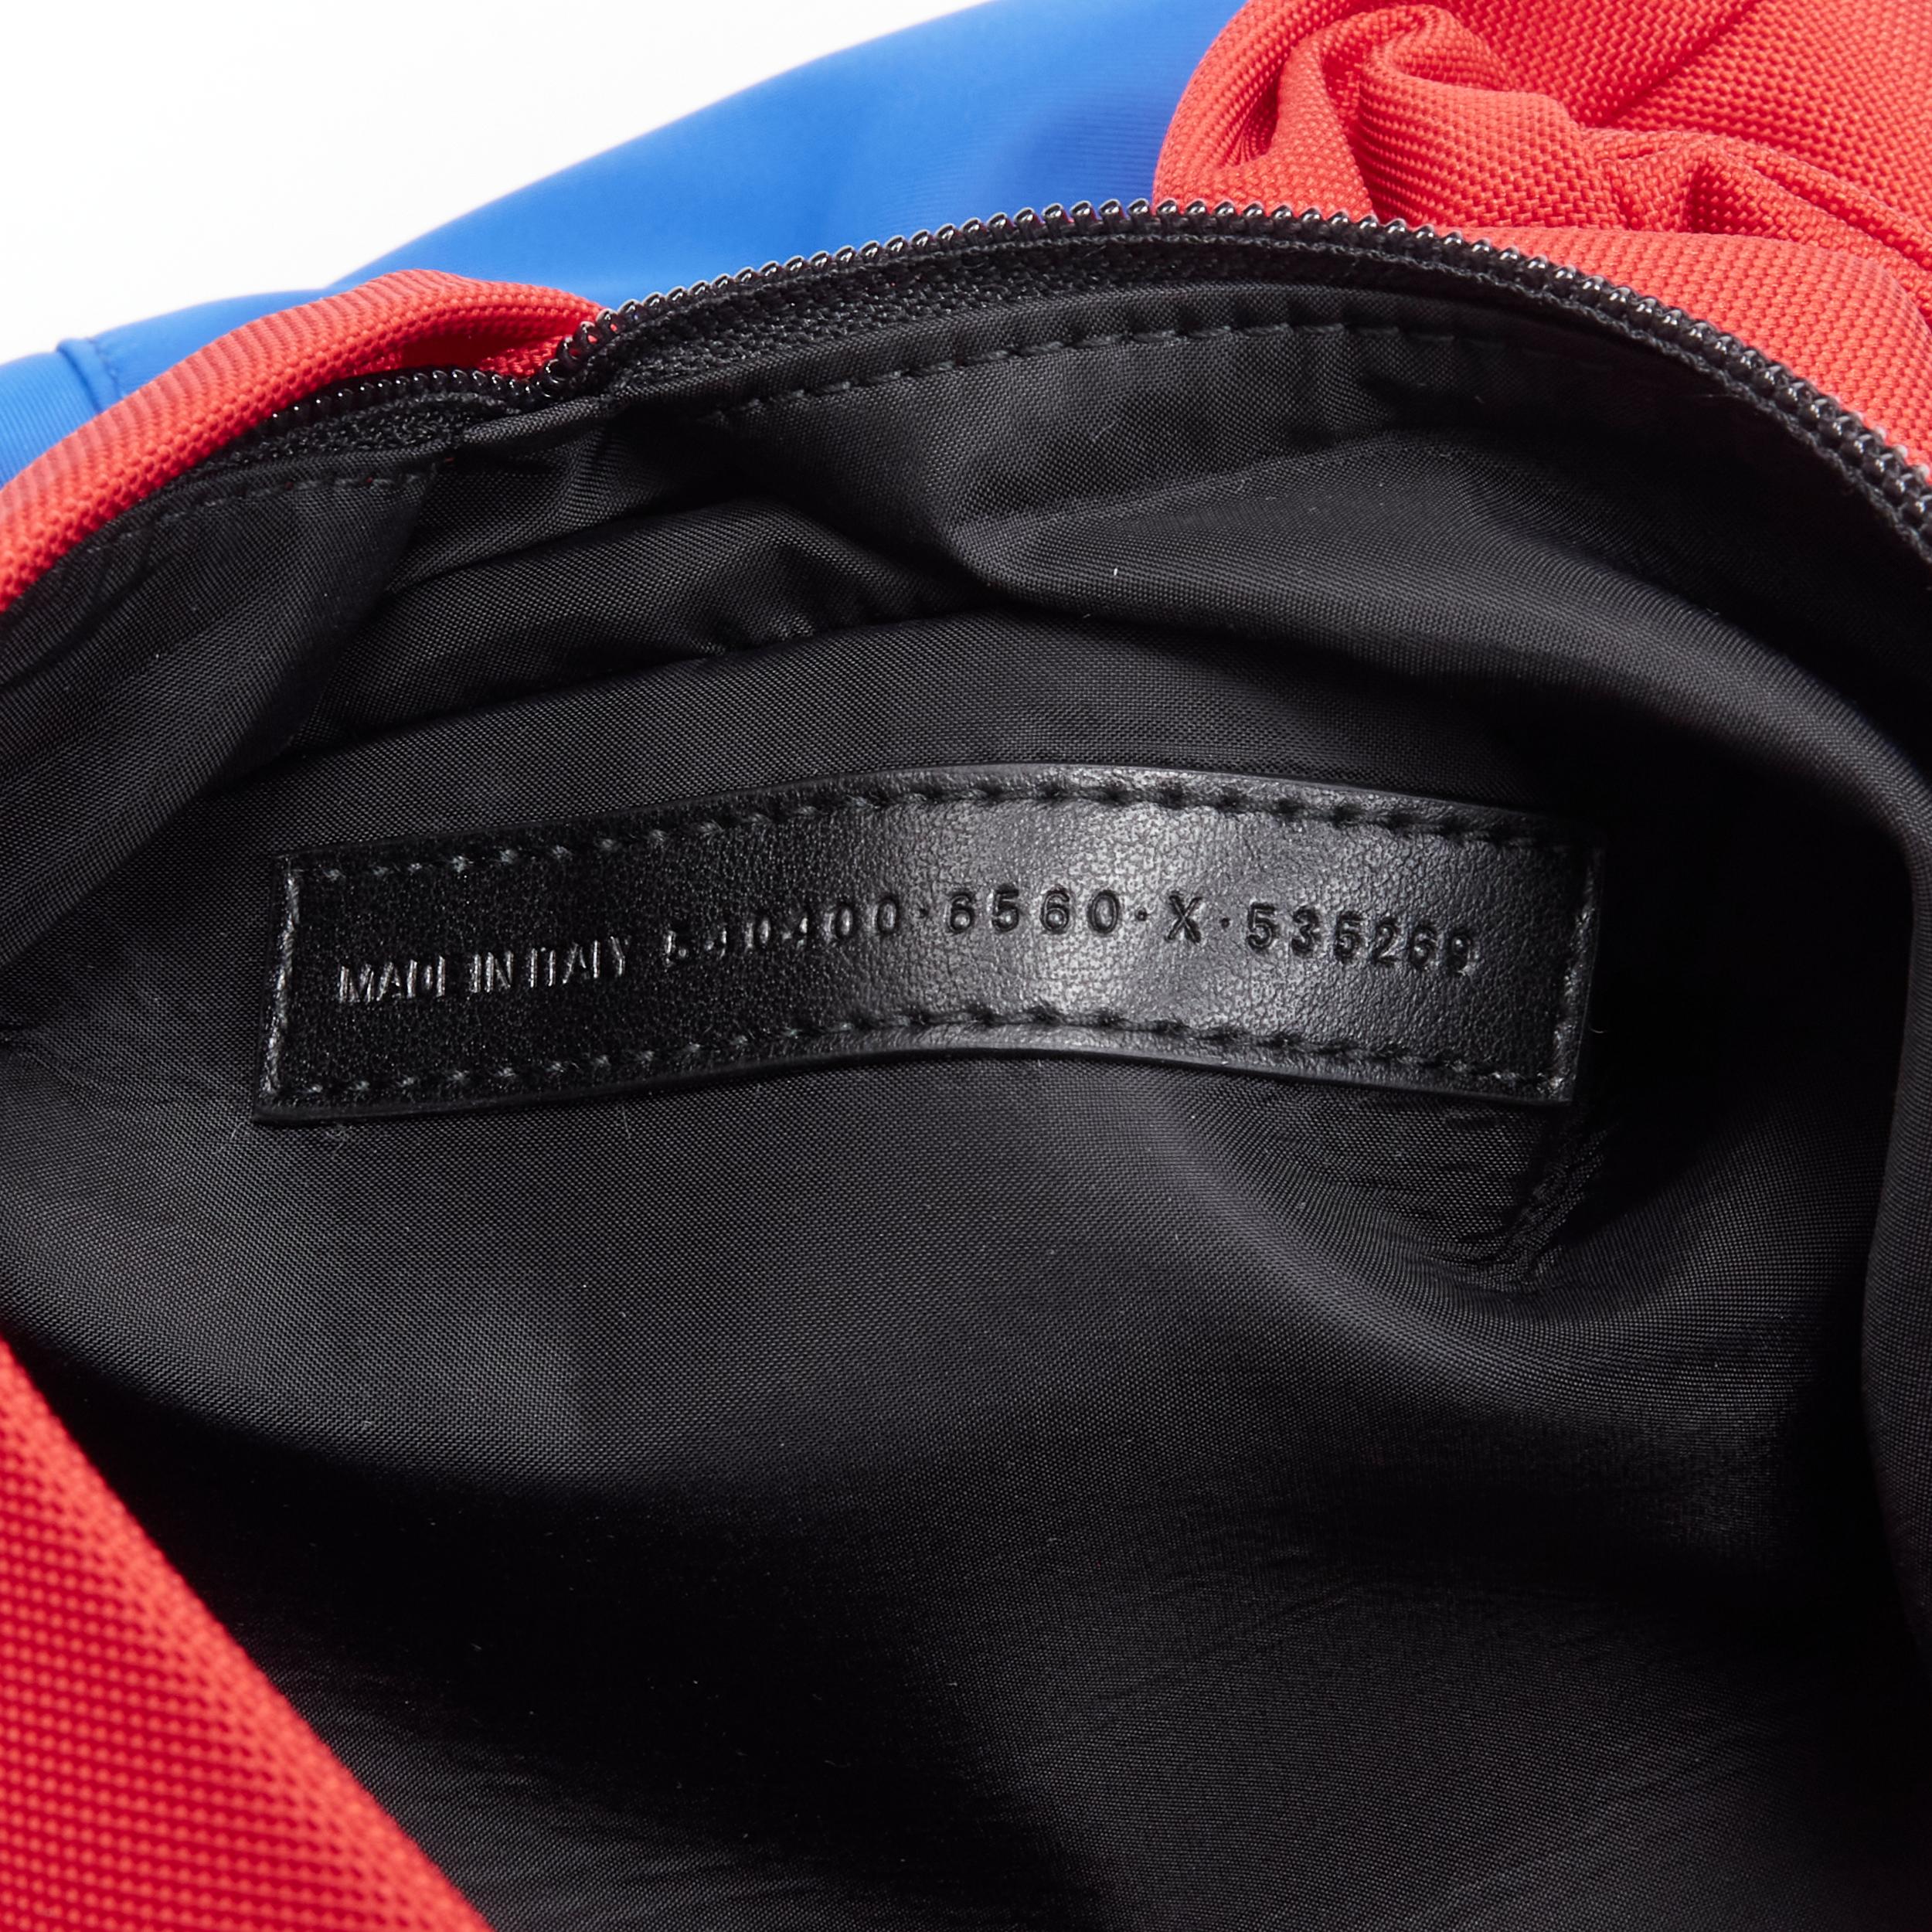 new BALENCIAGA Double Backpack red blue nylon layered monogram jacquard bag 4